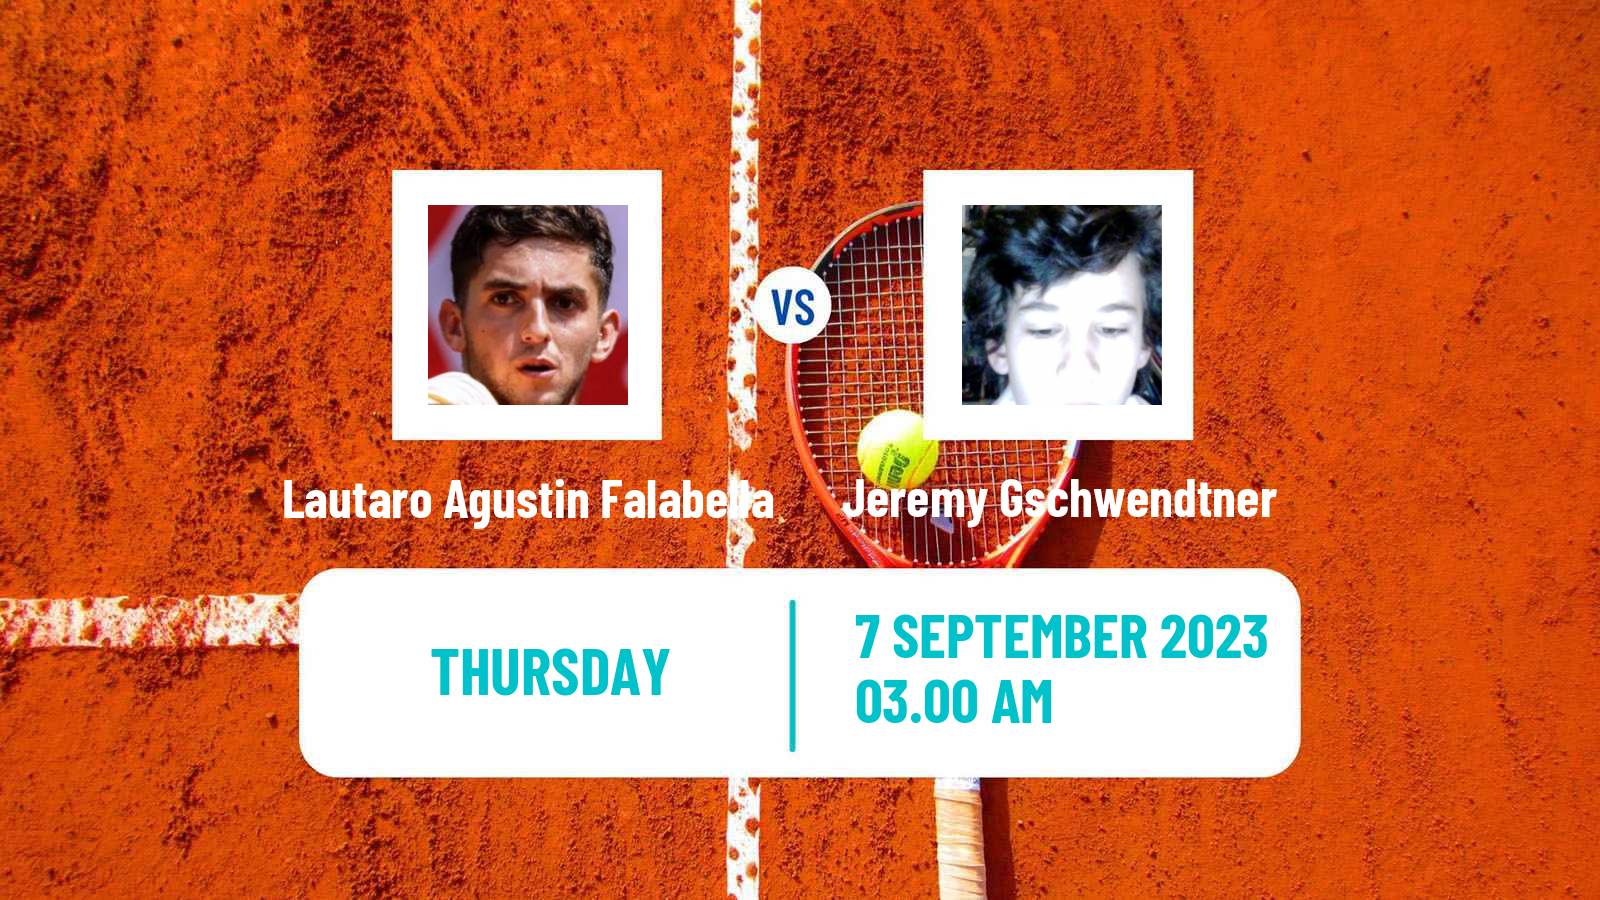 Tennis ITF M15 Constanta 2 Men Lautaro Agustin Falabella - Jeremy Gschwendtner